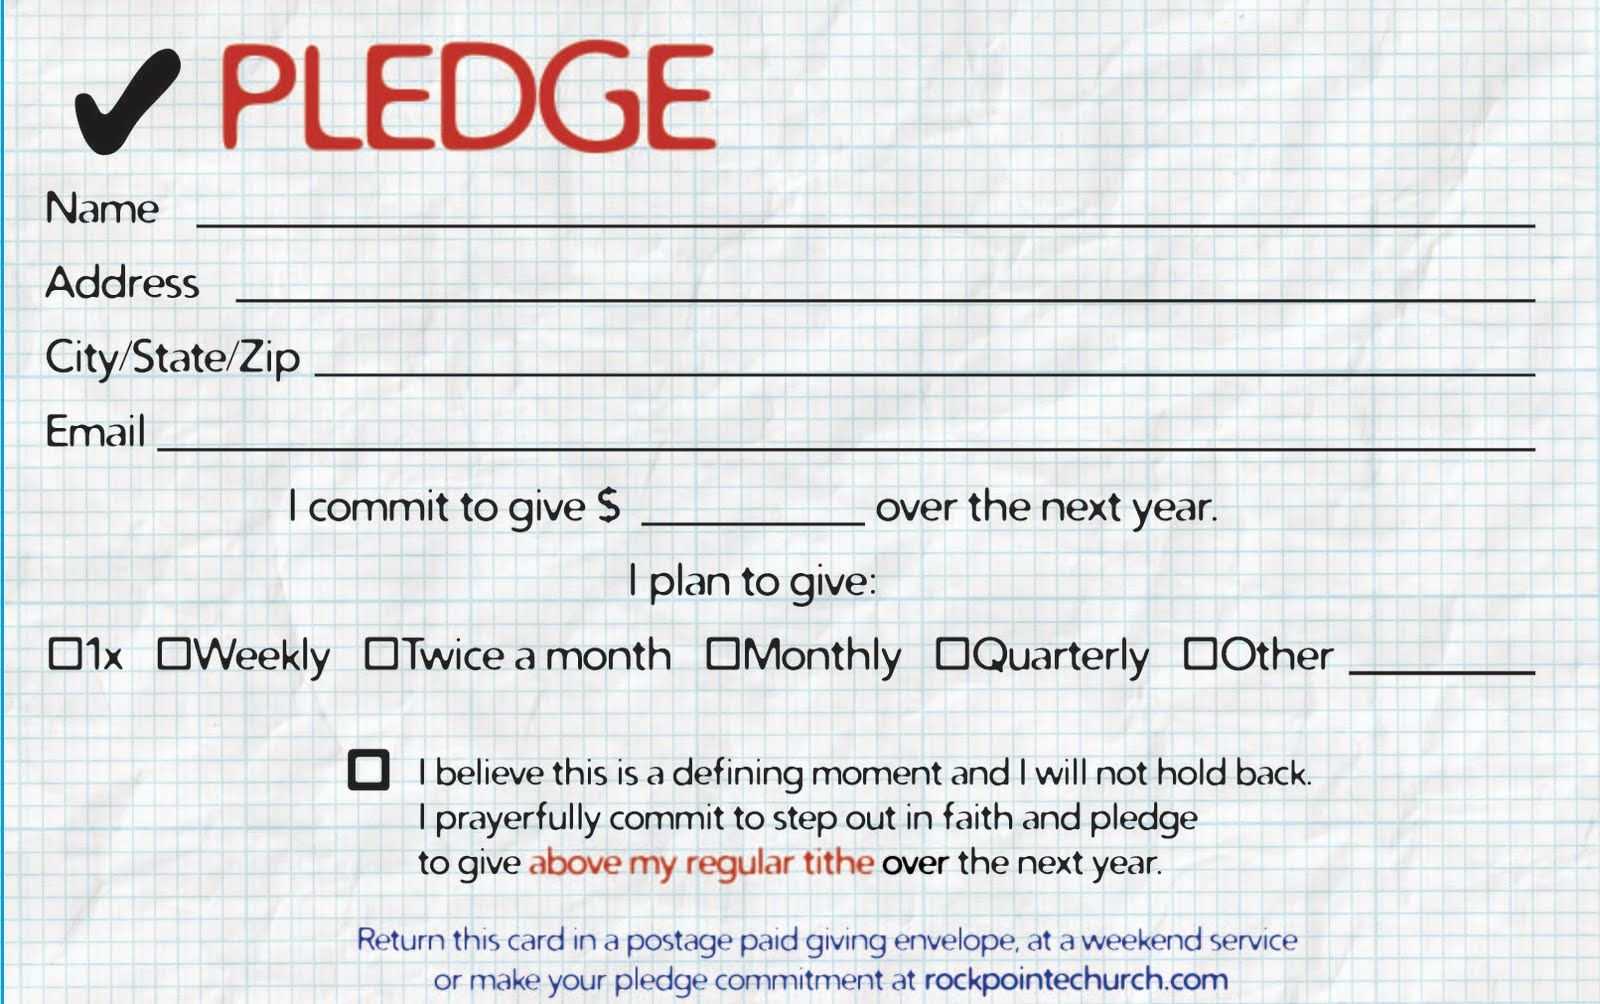 Pledge Cards For Churches | Pledge Card Templates | Card Inside Fundraising Pledge Card Template